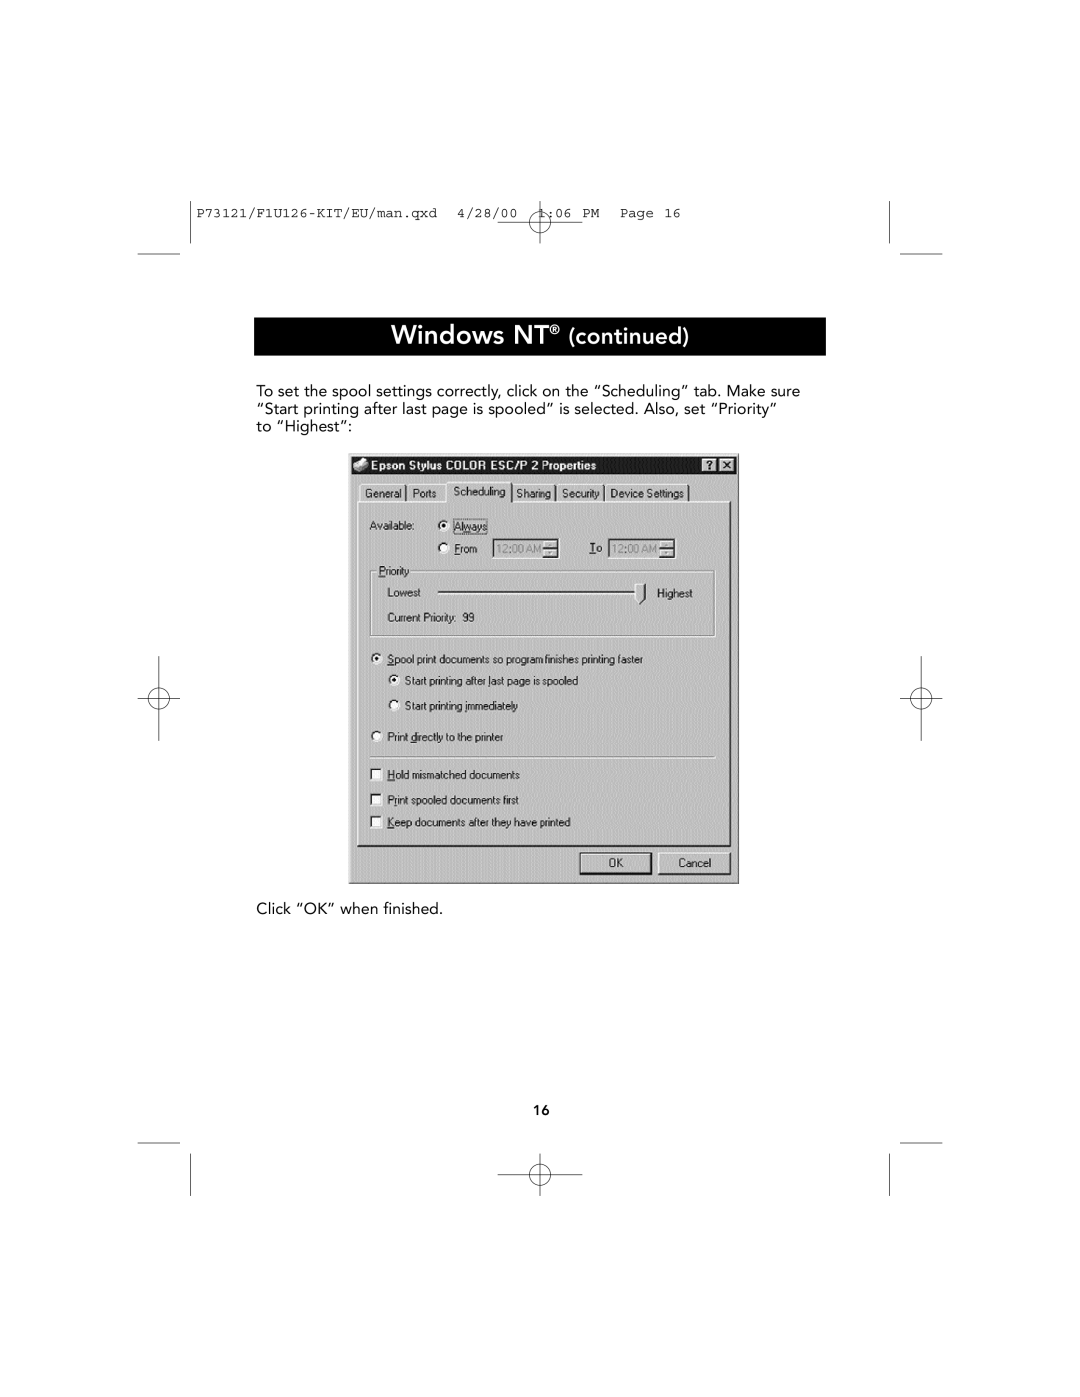 Belkin user manual Windows NT continued, Click “OK” when finished, P73121/F1U126-KIT/EU/man.qxd 4/28/00 106 PM Page 